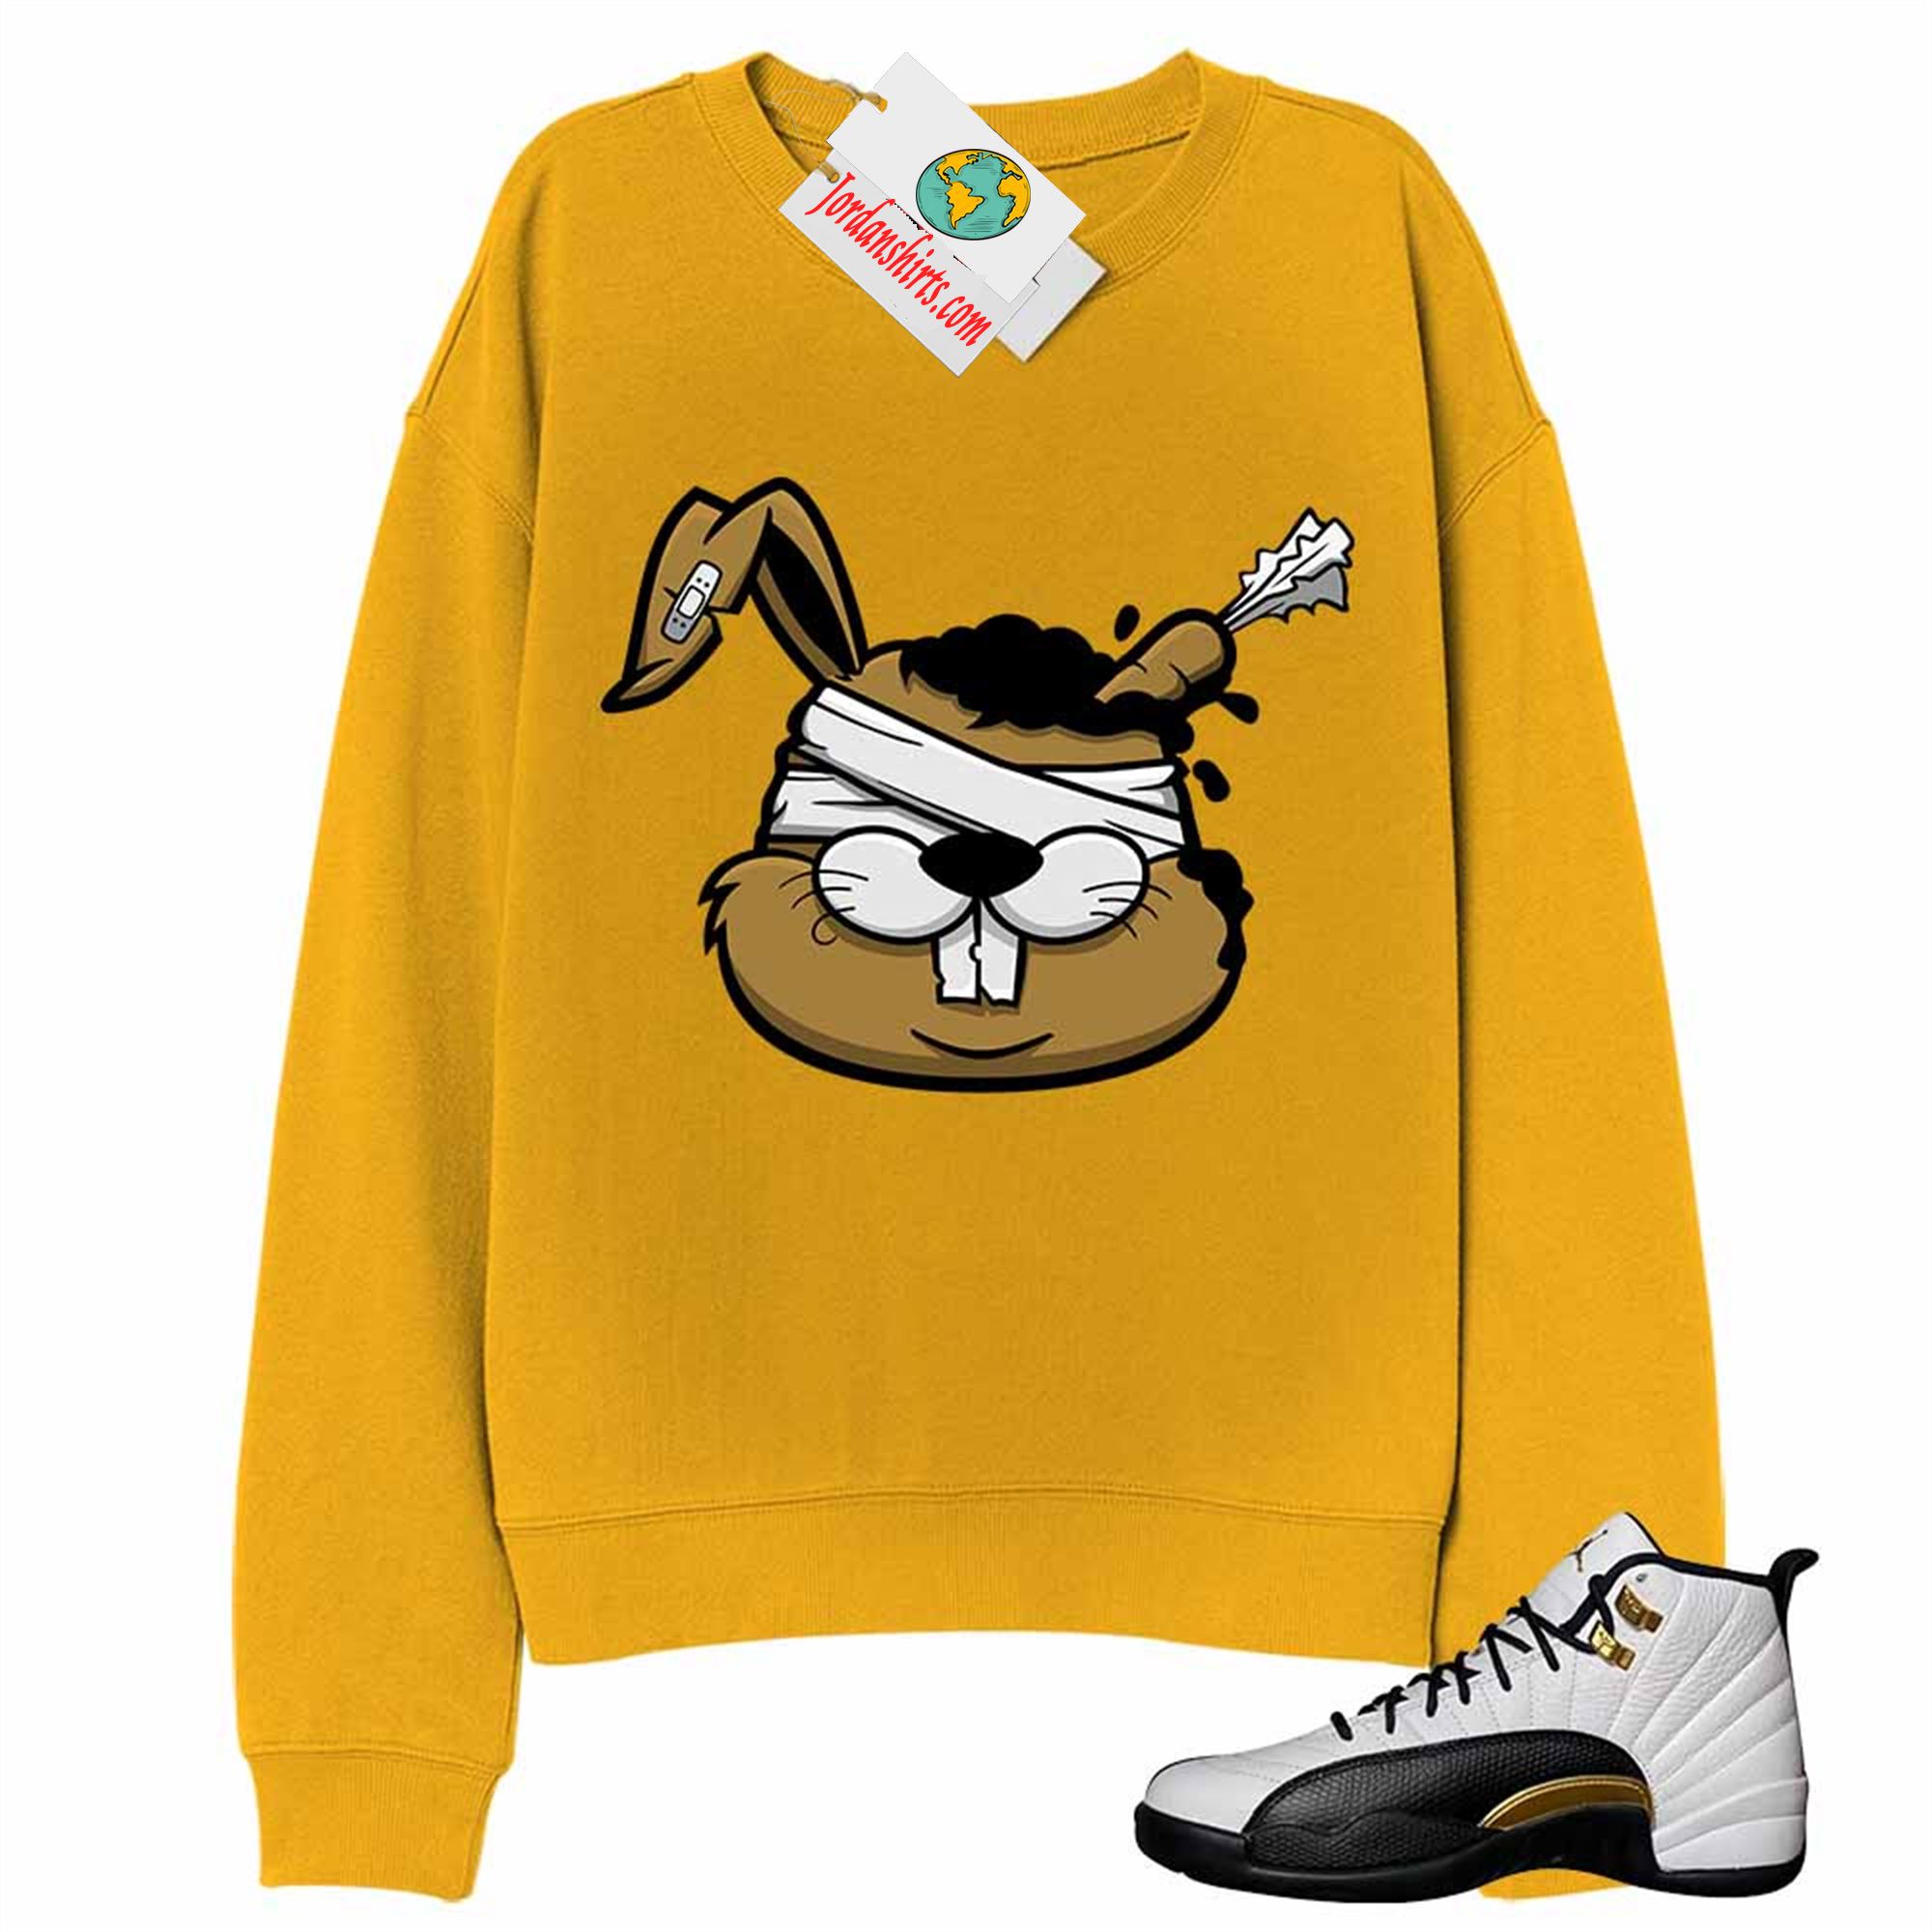 Jordan 12 Sweatshirt, Zombie Bunny Gold Sweatshirt Air Jordan 12 Royalty 12s Size Up To 5xl